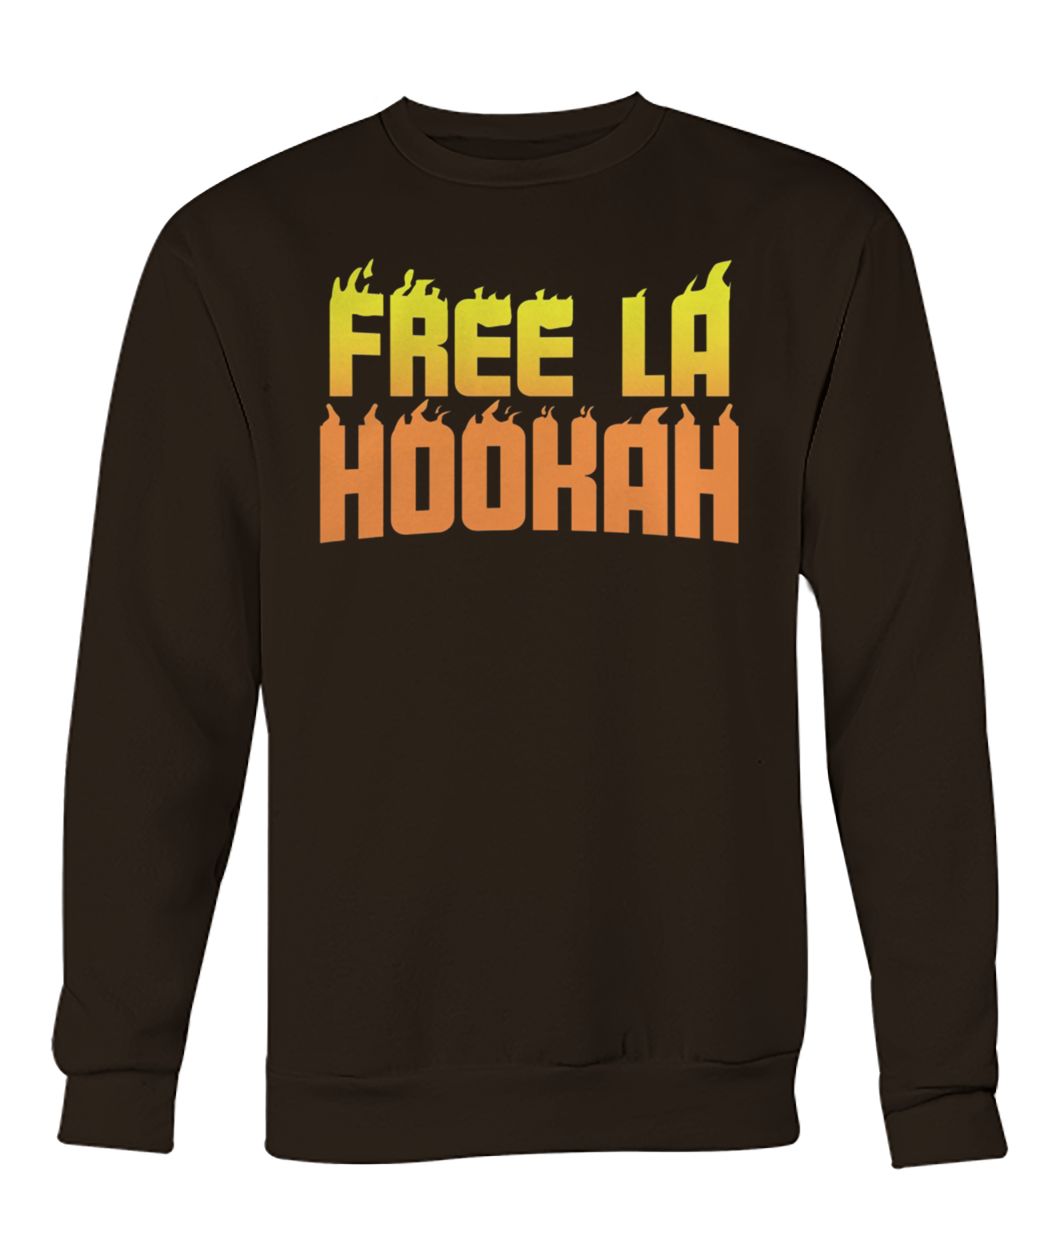 Free la hookah crew neck sweatshirt